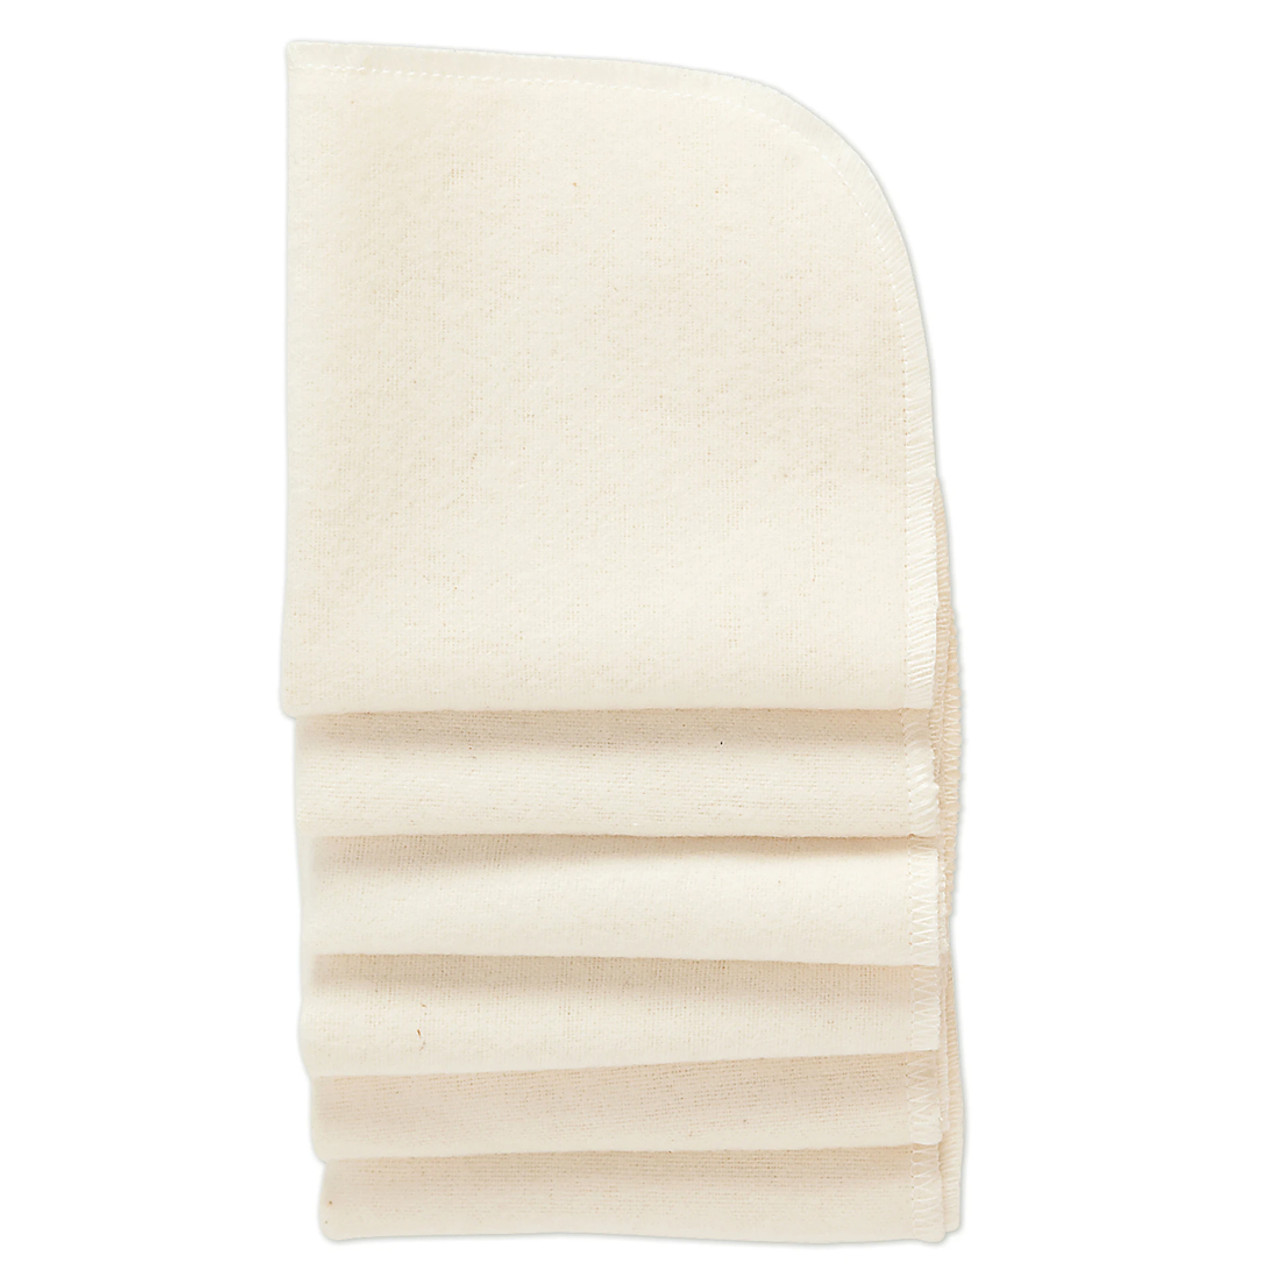 NuAngel Cotton Baby Washcloths 6 Pack